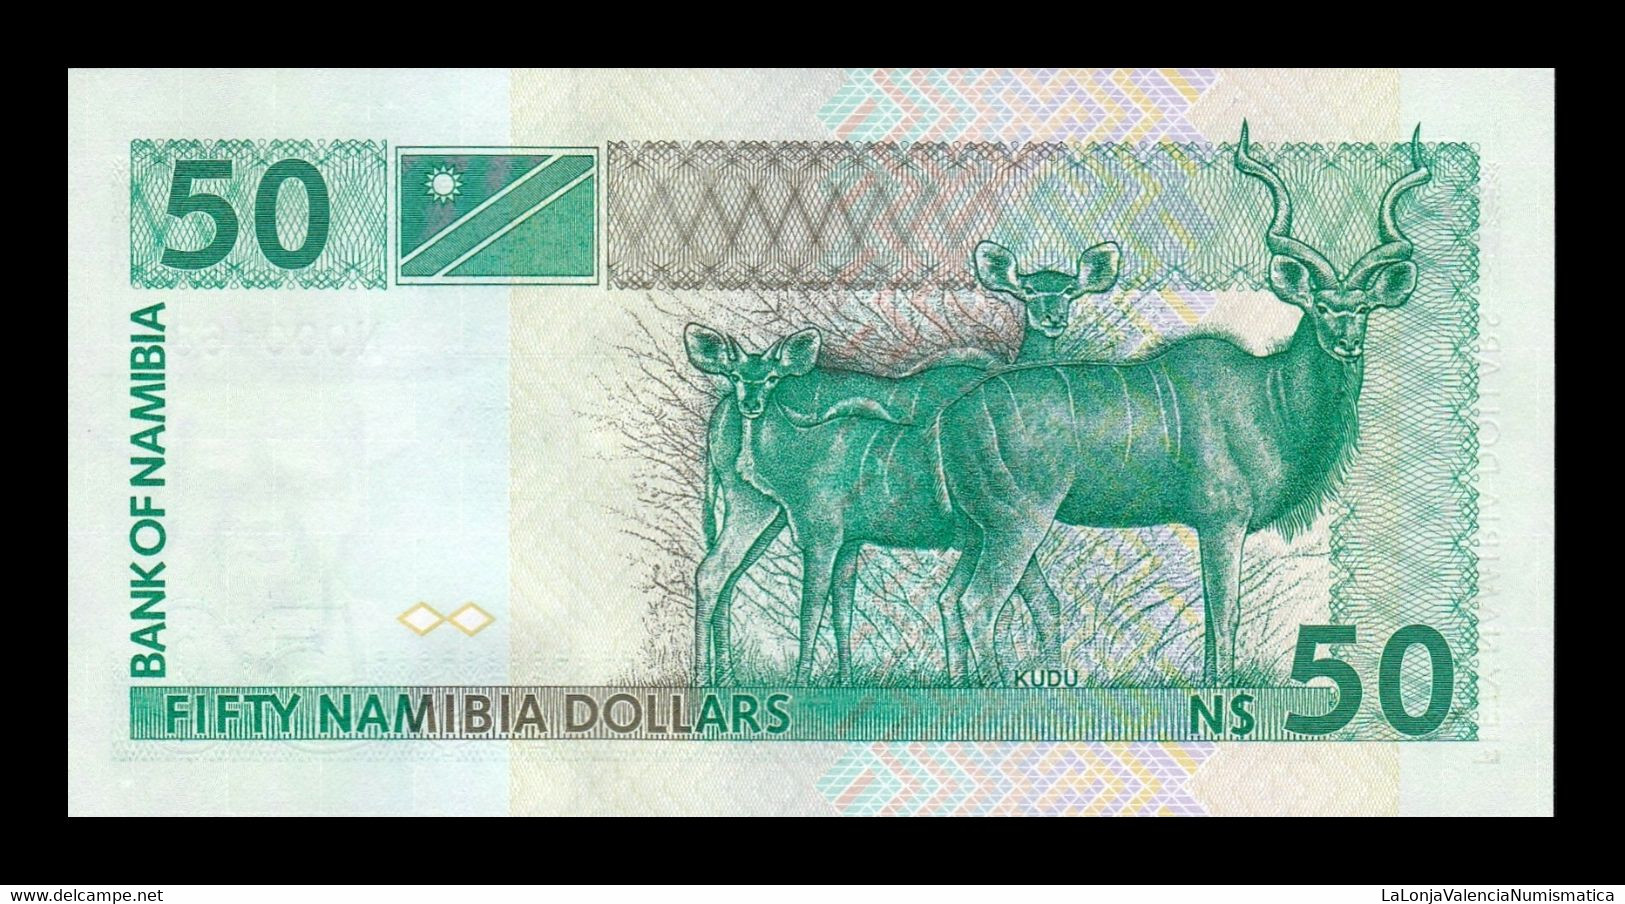 Namibia 50 Dollars 1993 Pick 2 Low Serial T.691 SC UNC - Namibia